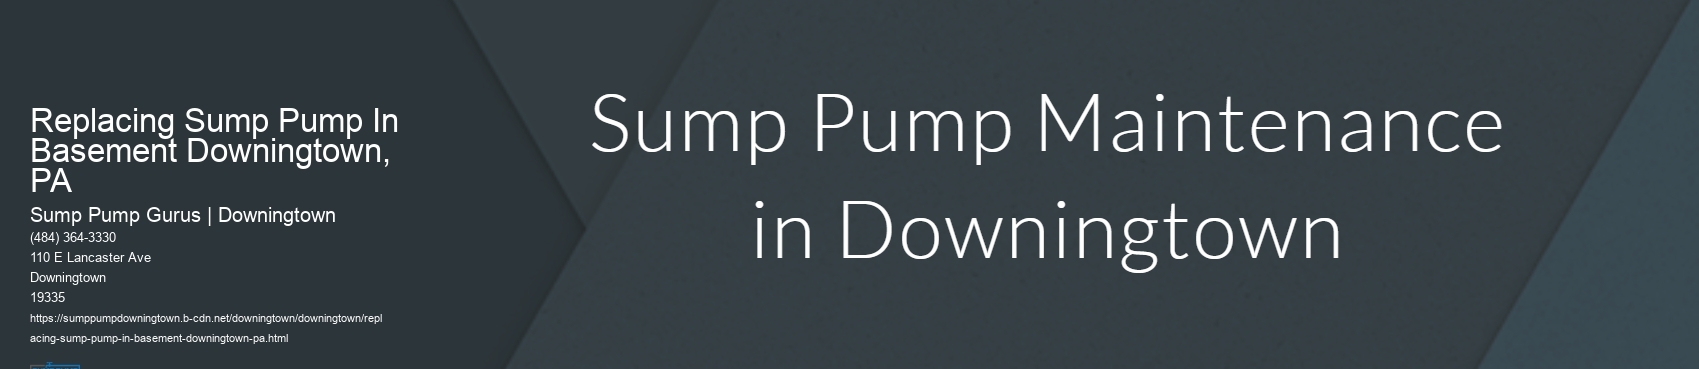 Replacing Sump Pump In Basement Downingtown, PA